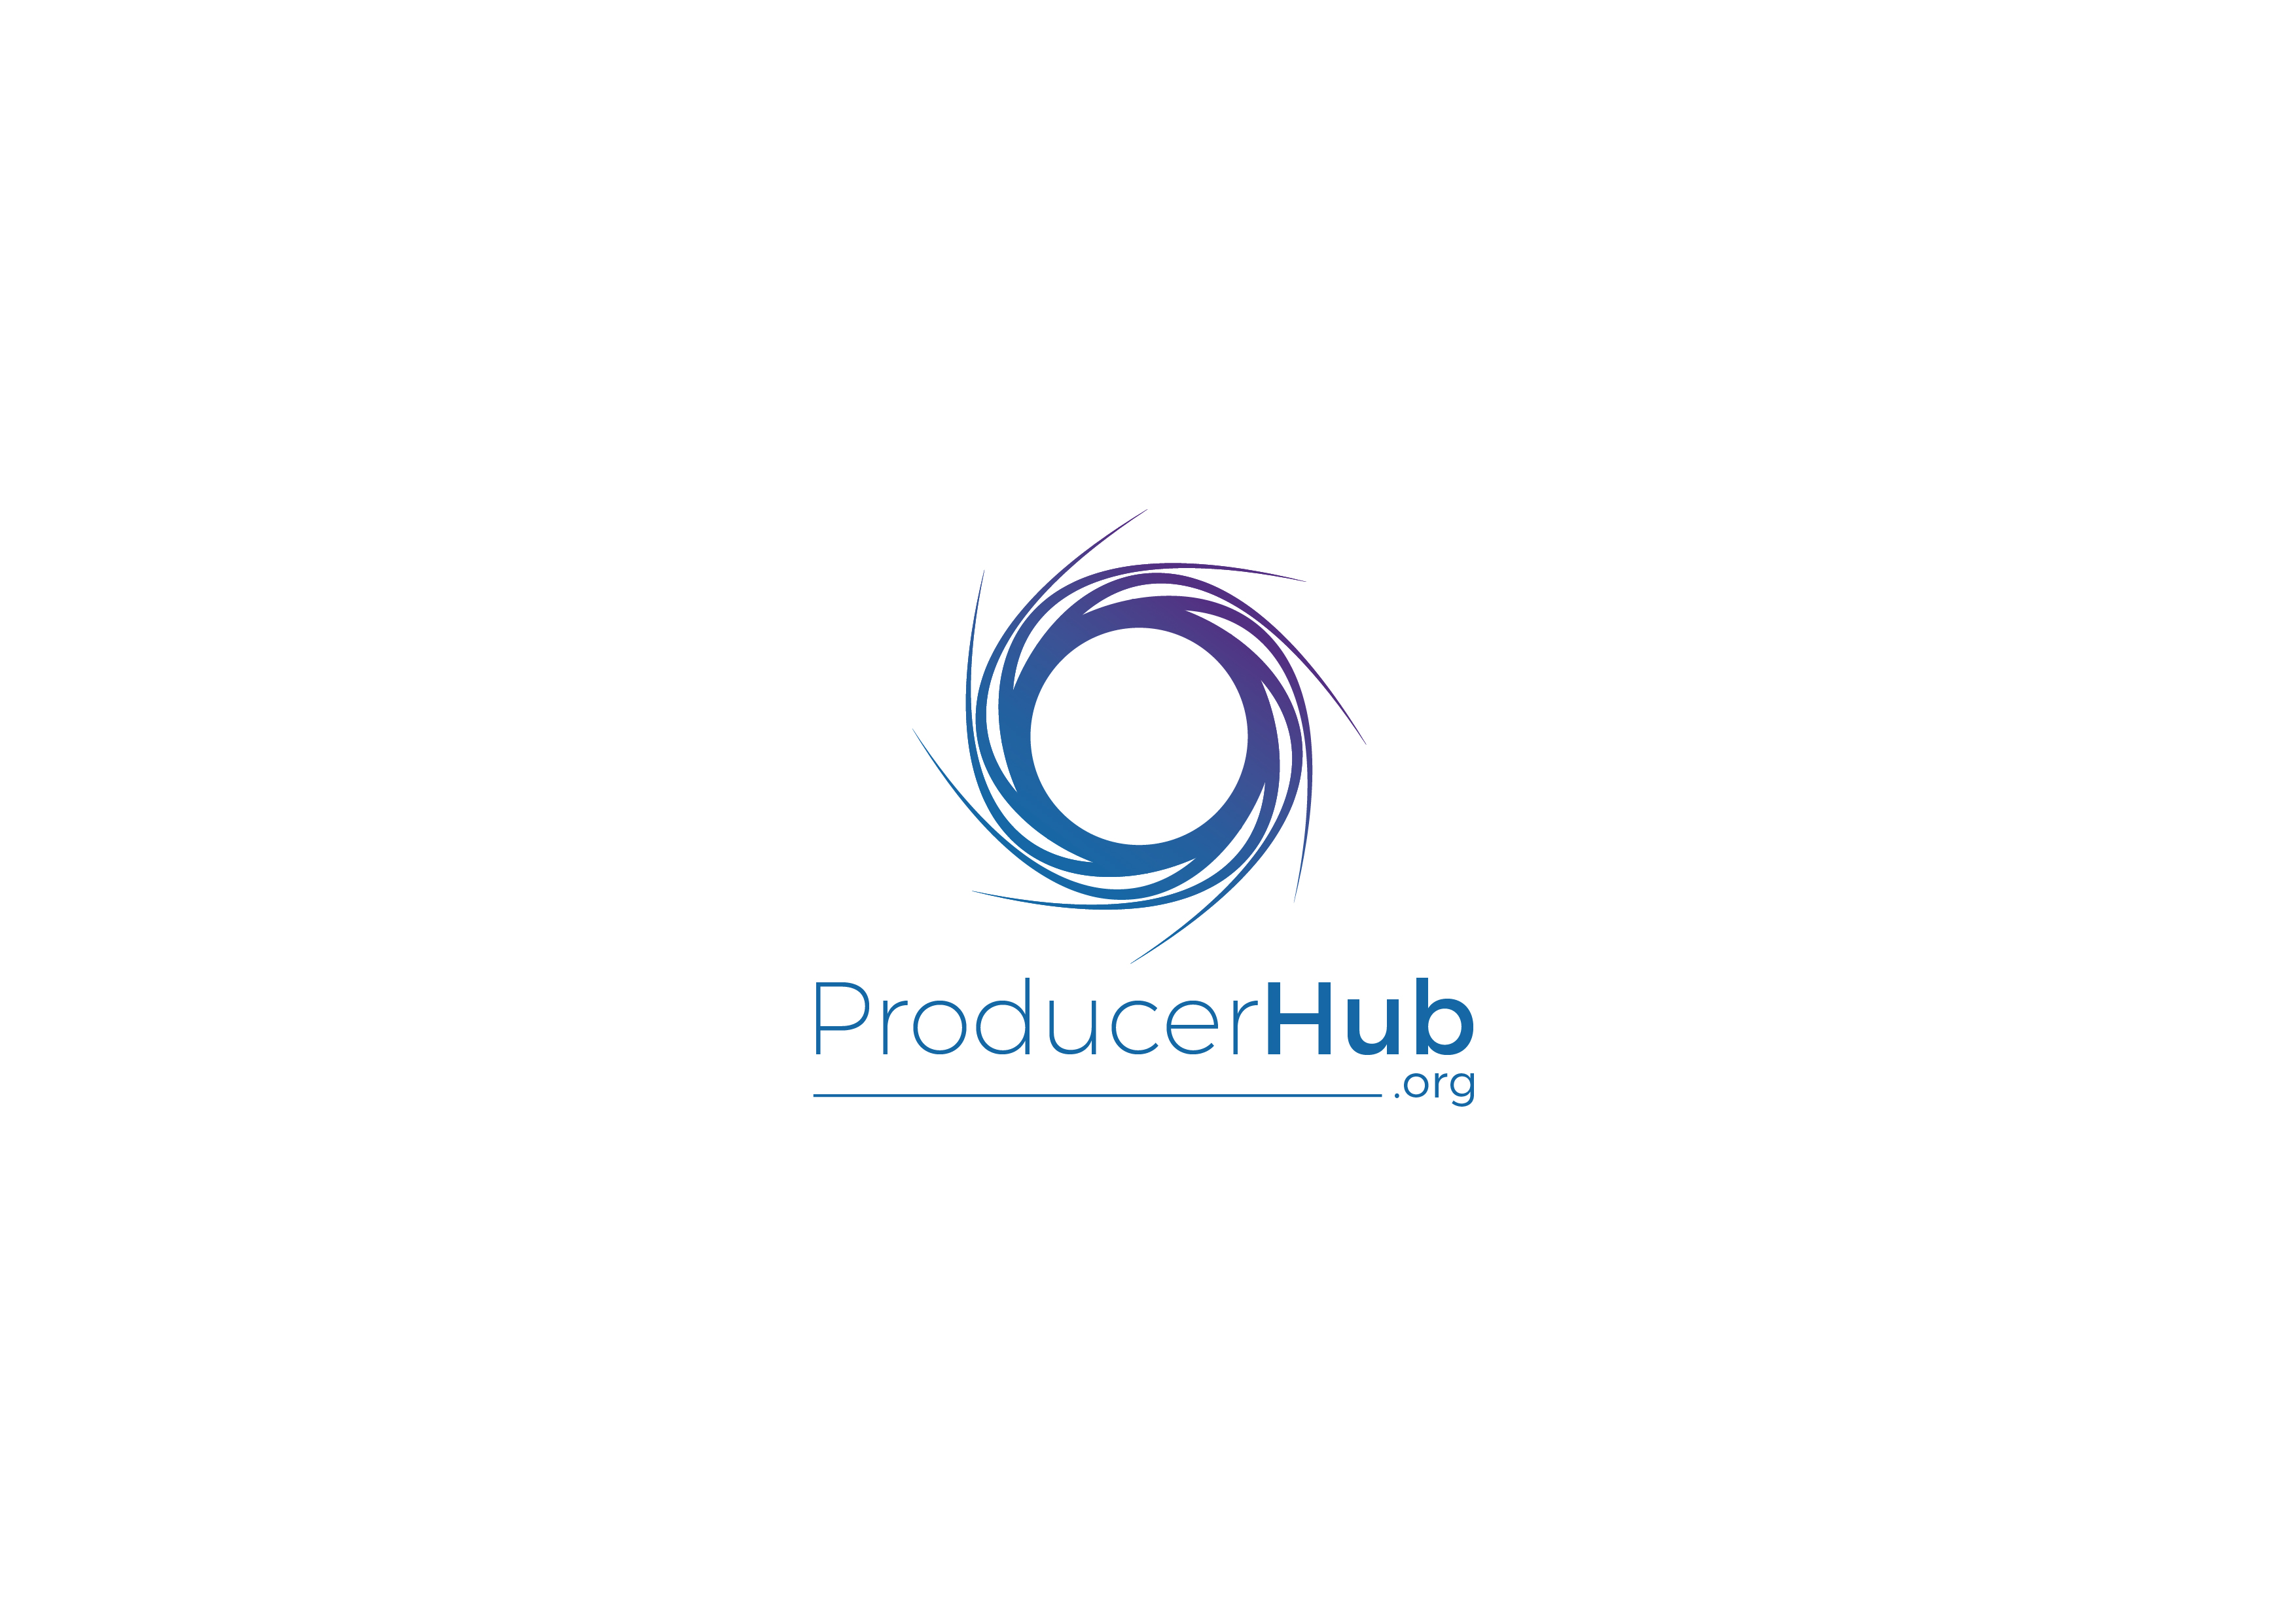 production hub indeed